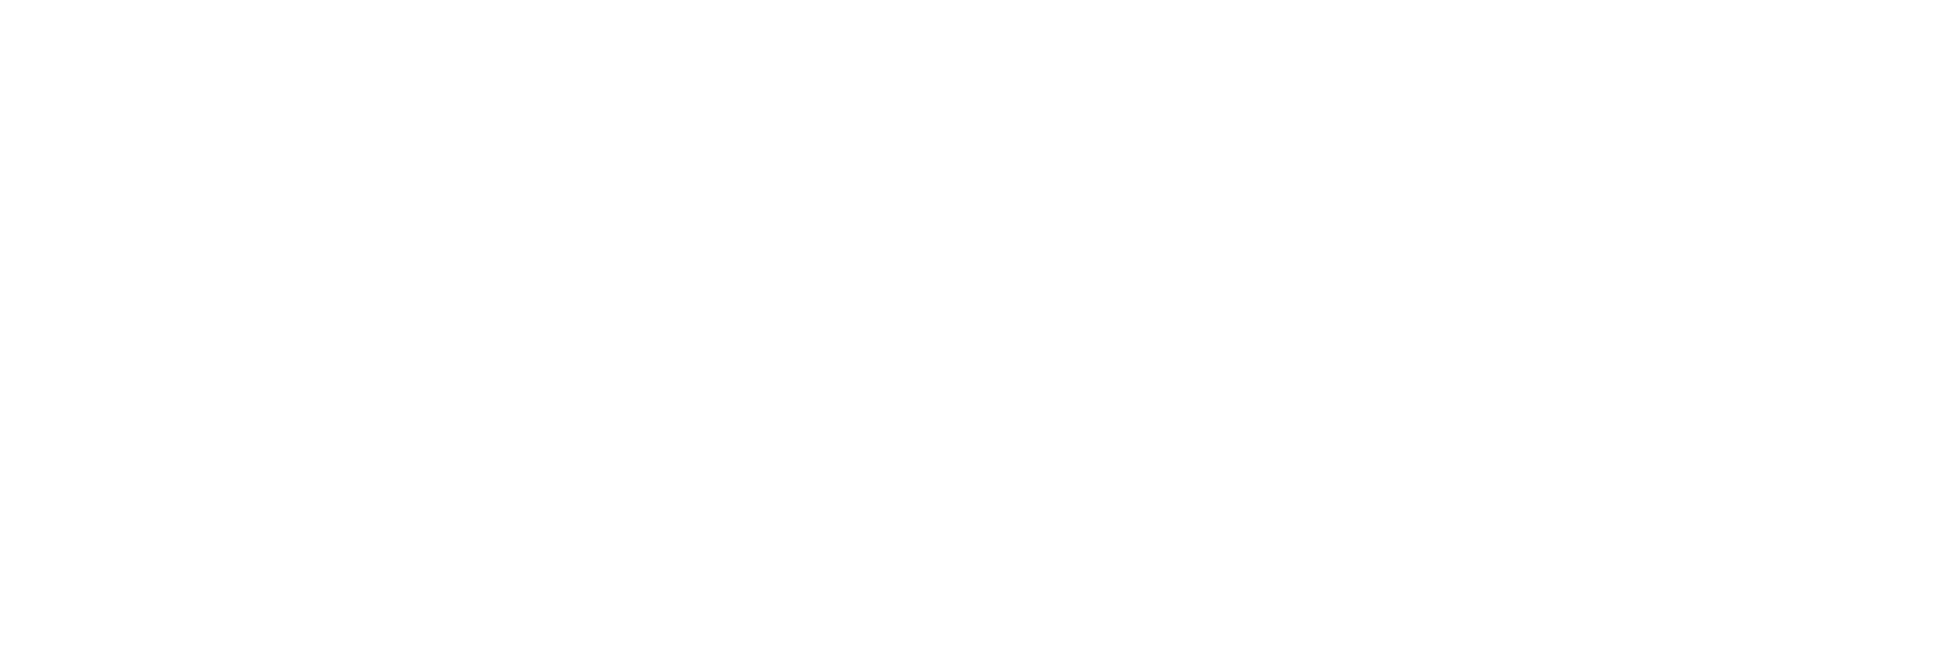 AniCura Gjøvik Dyrehospital logo